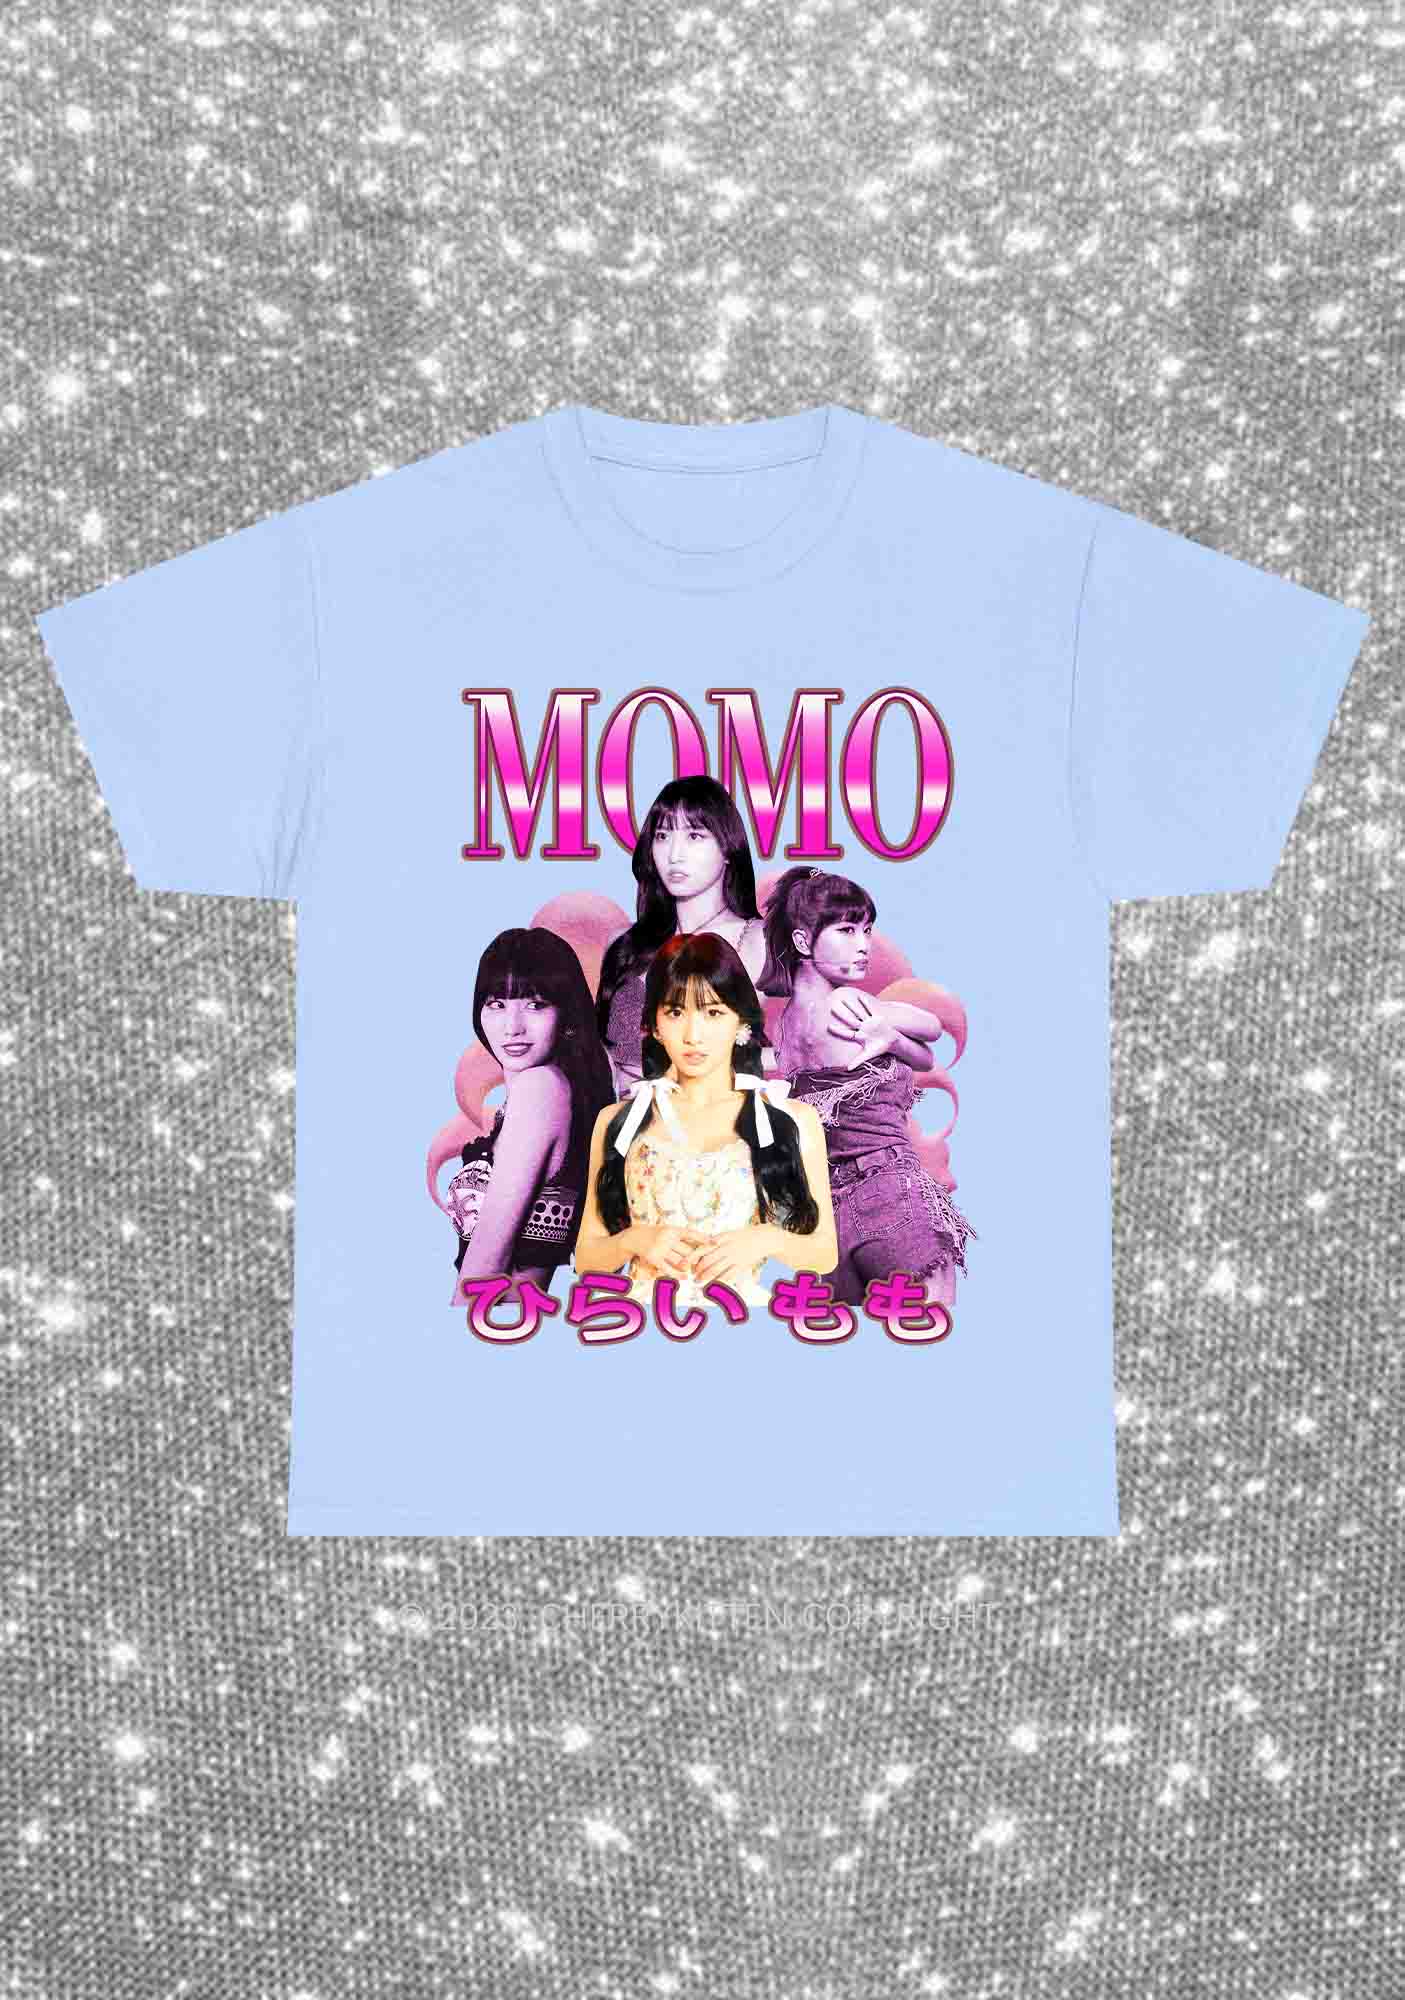 Momo Photos Kpop Y2K Chunky Shirt Cherrykitten